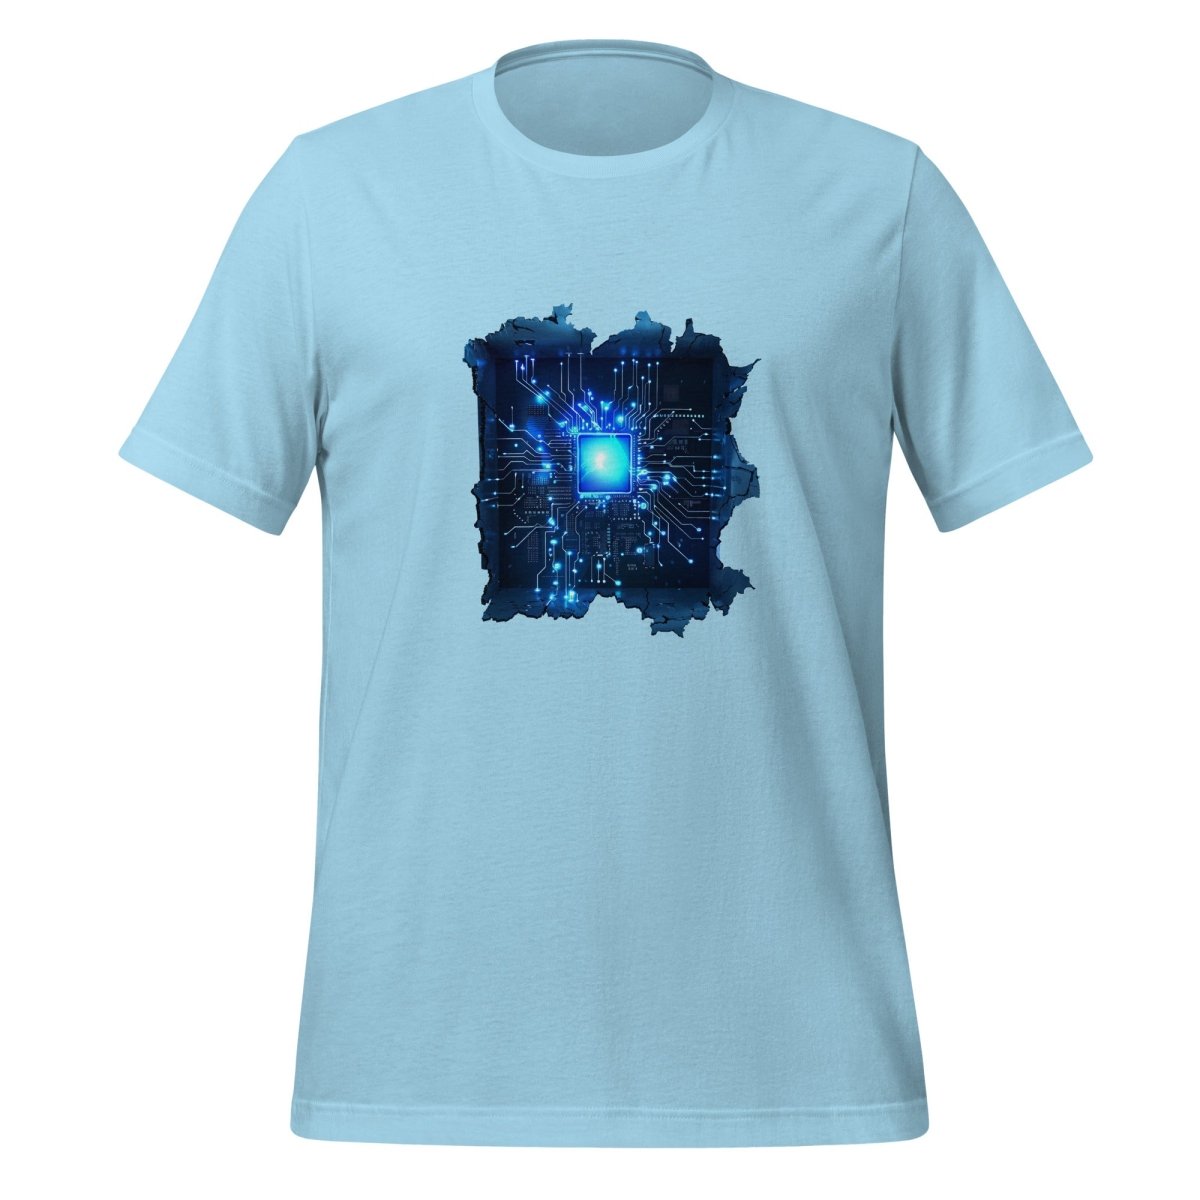 CPU Heart T - Shirt (unisex) - Ocean Blue - AI Store